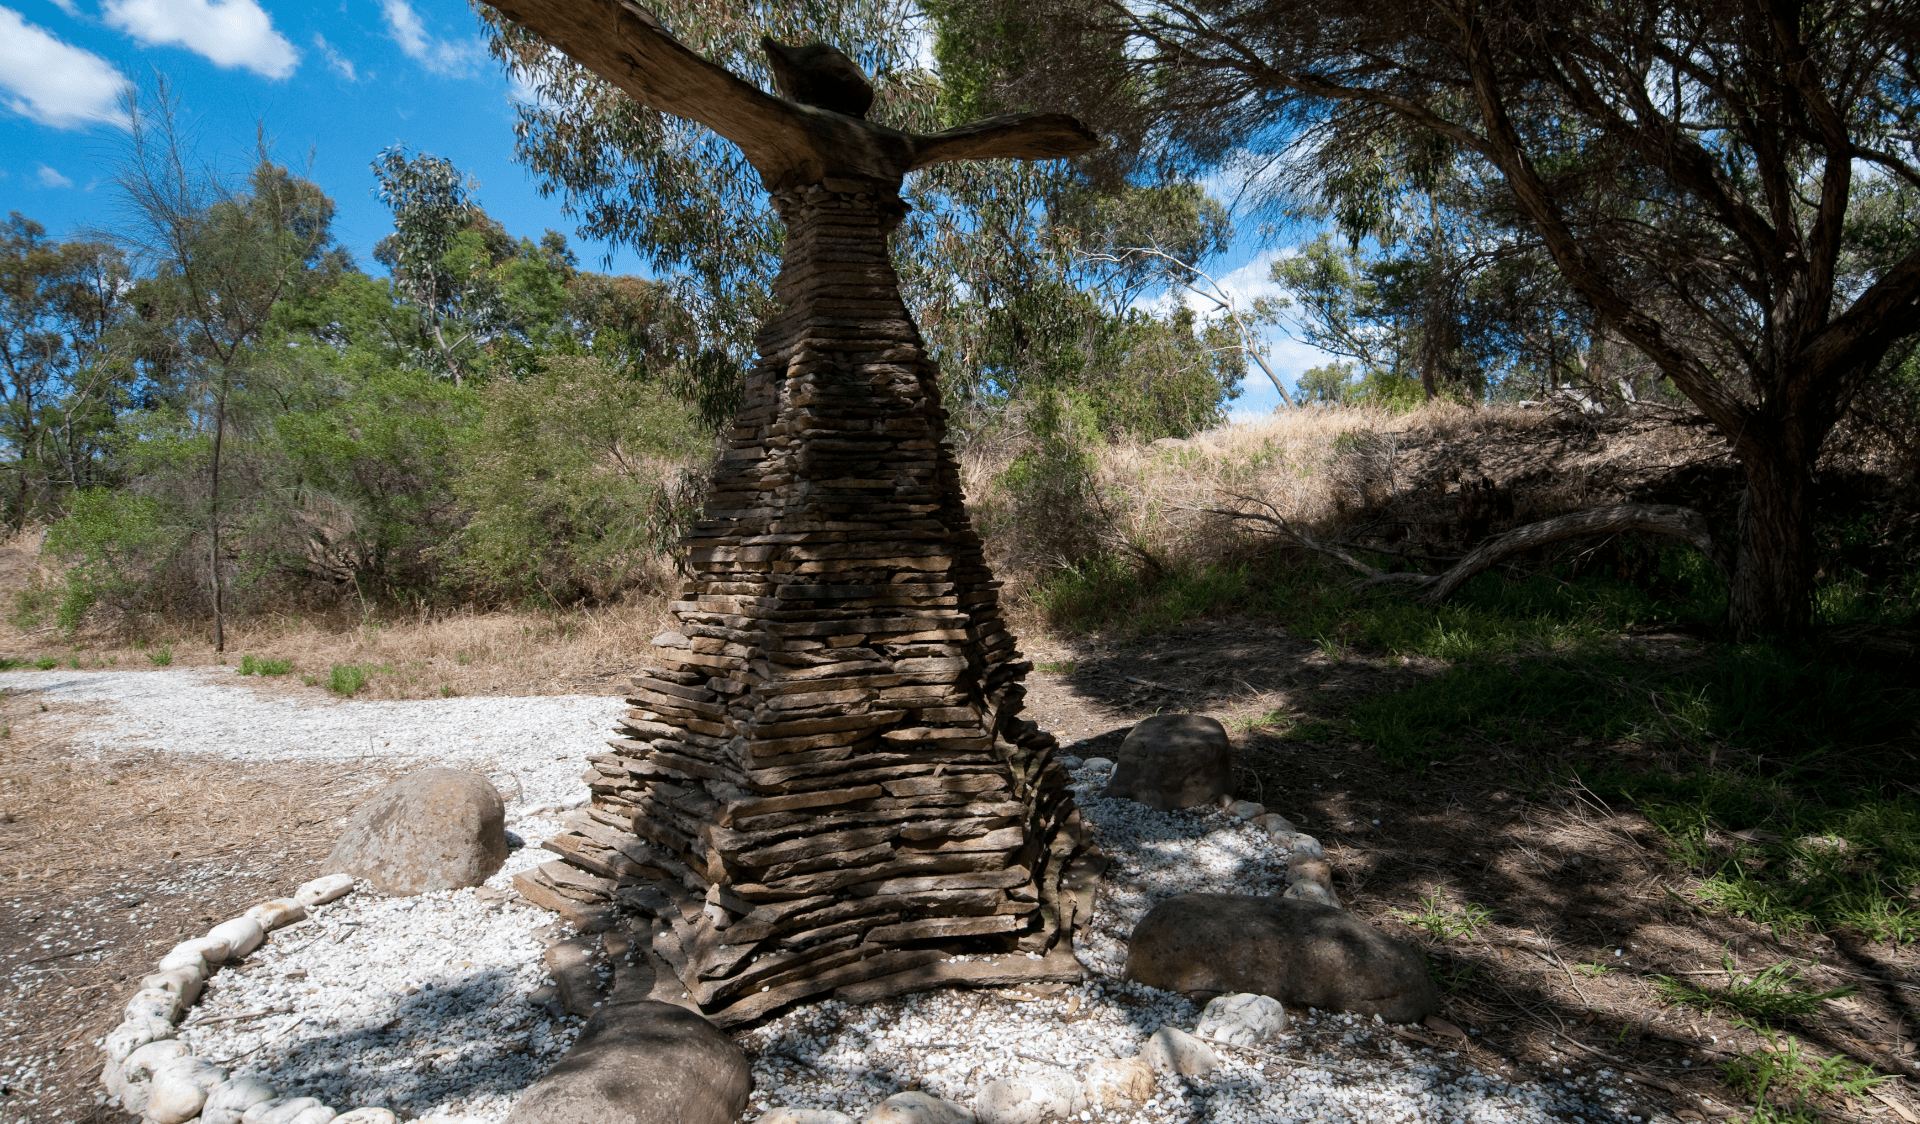 A sculpture in Herring Island Environmental Sculpture Park